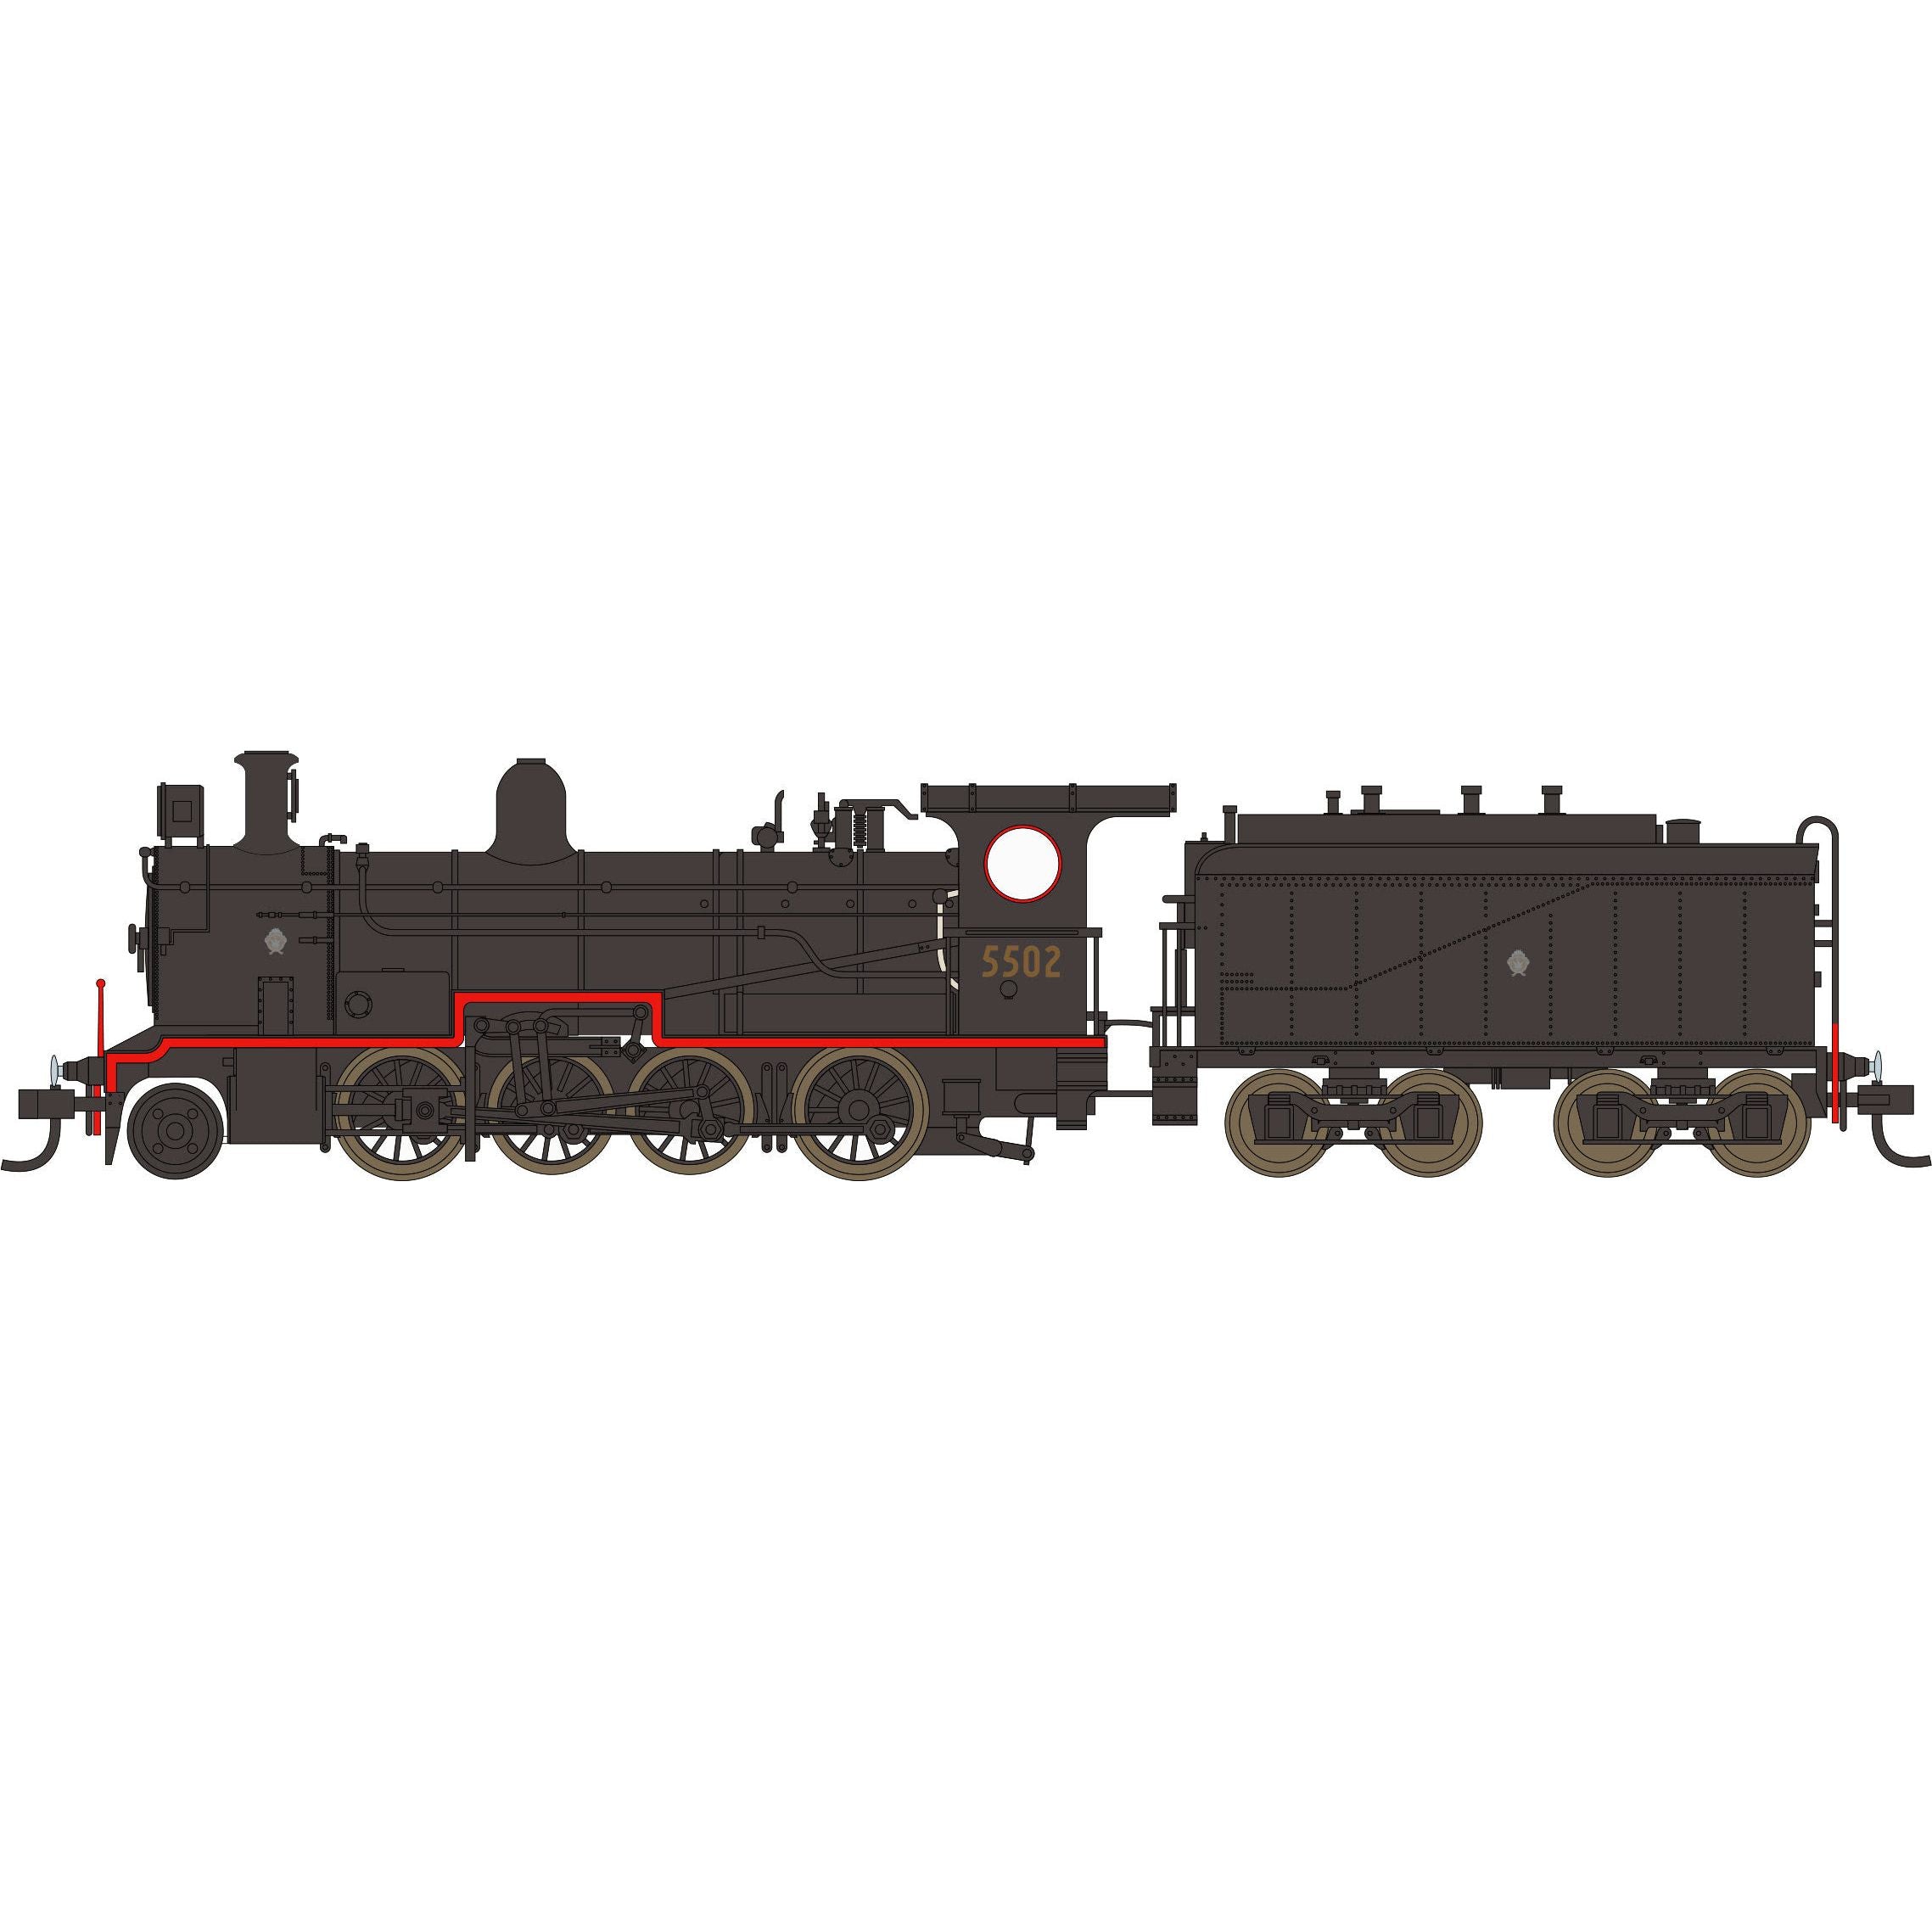 ARM D5502  D55 Class 2-8-0 Consolidation Type Standard Good Locomotive